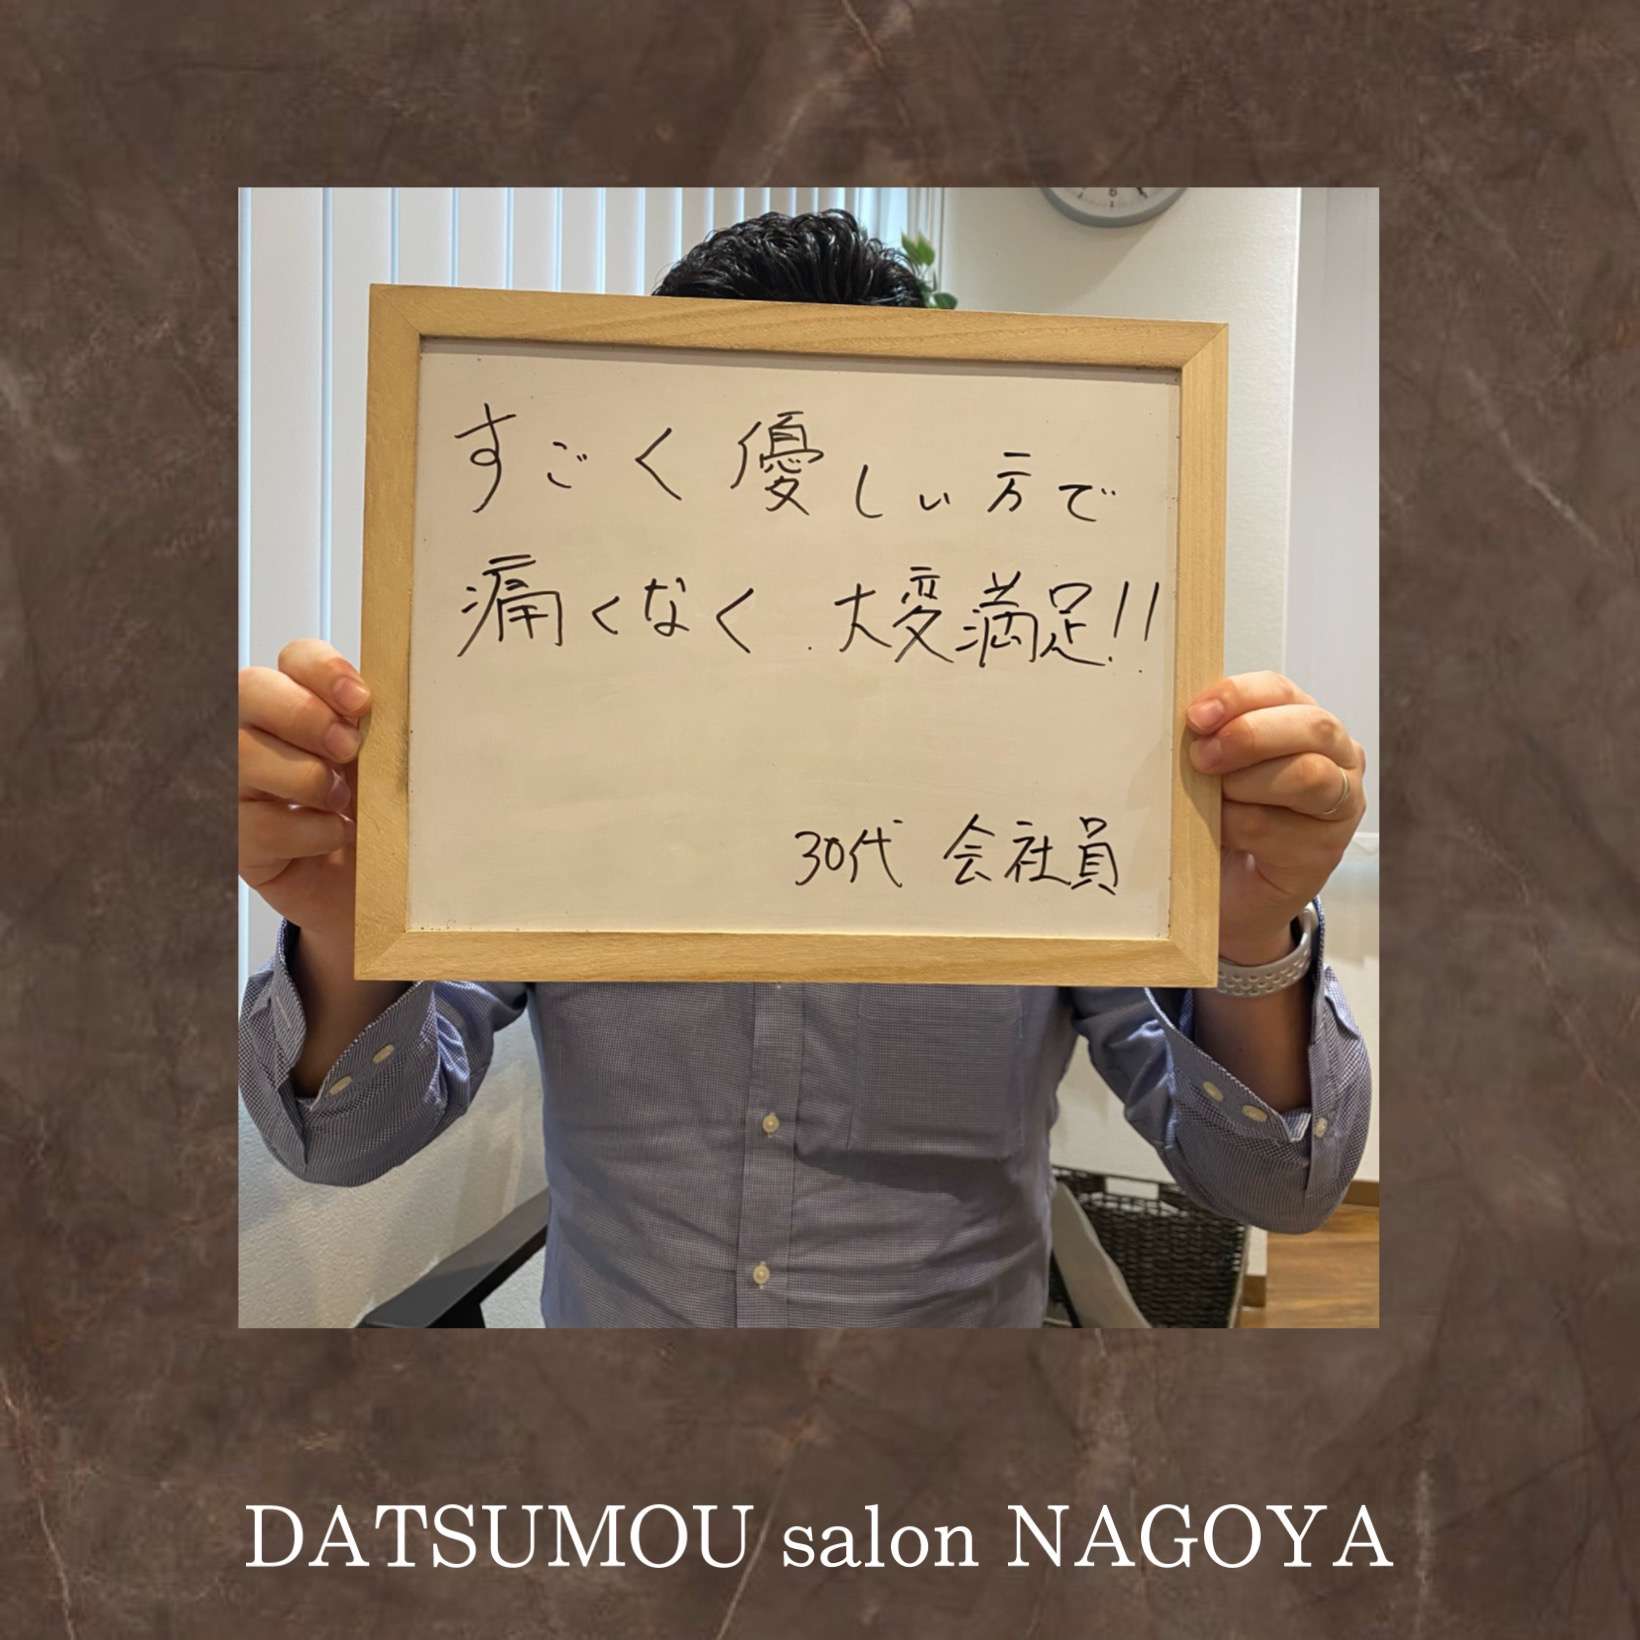 DATSUMOU salon NAGOYAって最高です！！！！！！